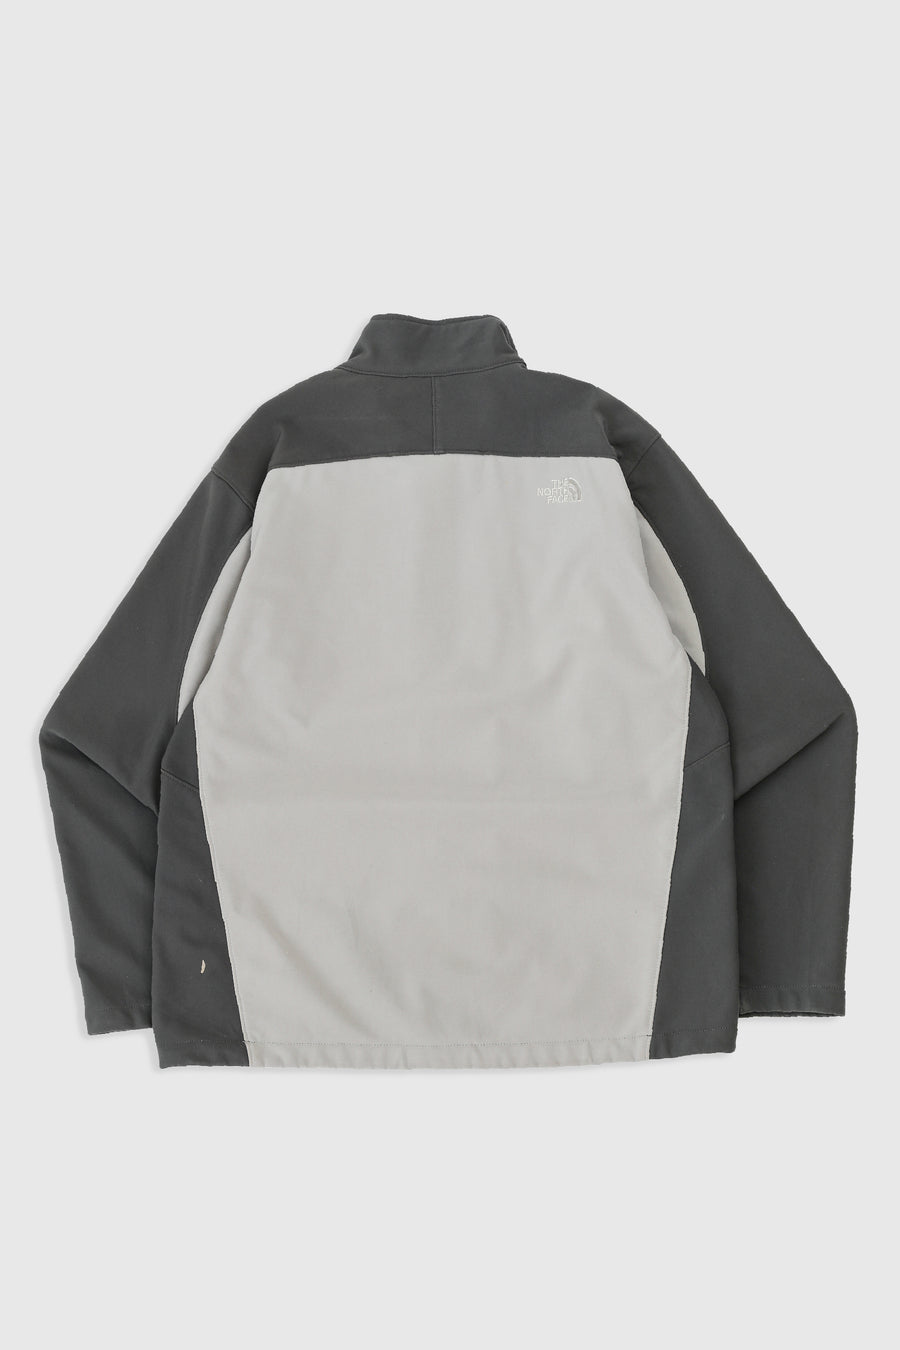 Vintage North Face Jacket - Men's XL